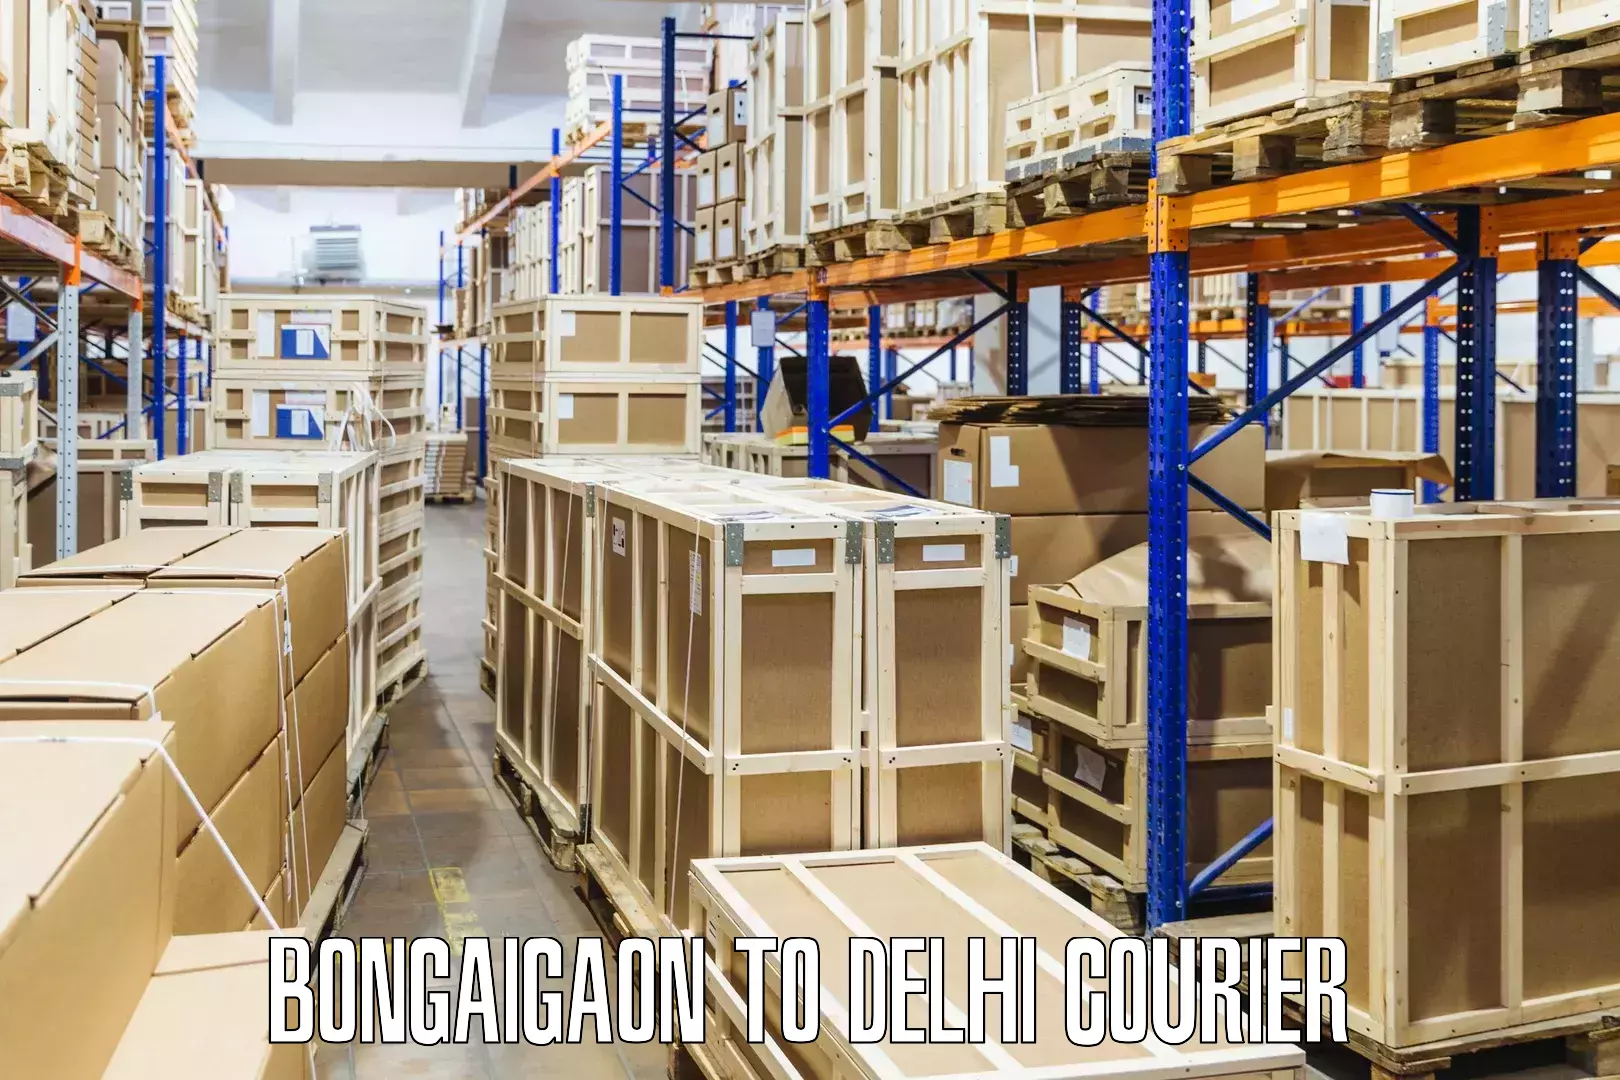 Nationwide shipping capabilities Bongaigaon to Lodhi Road